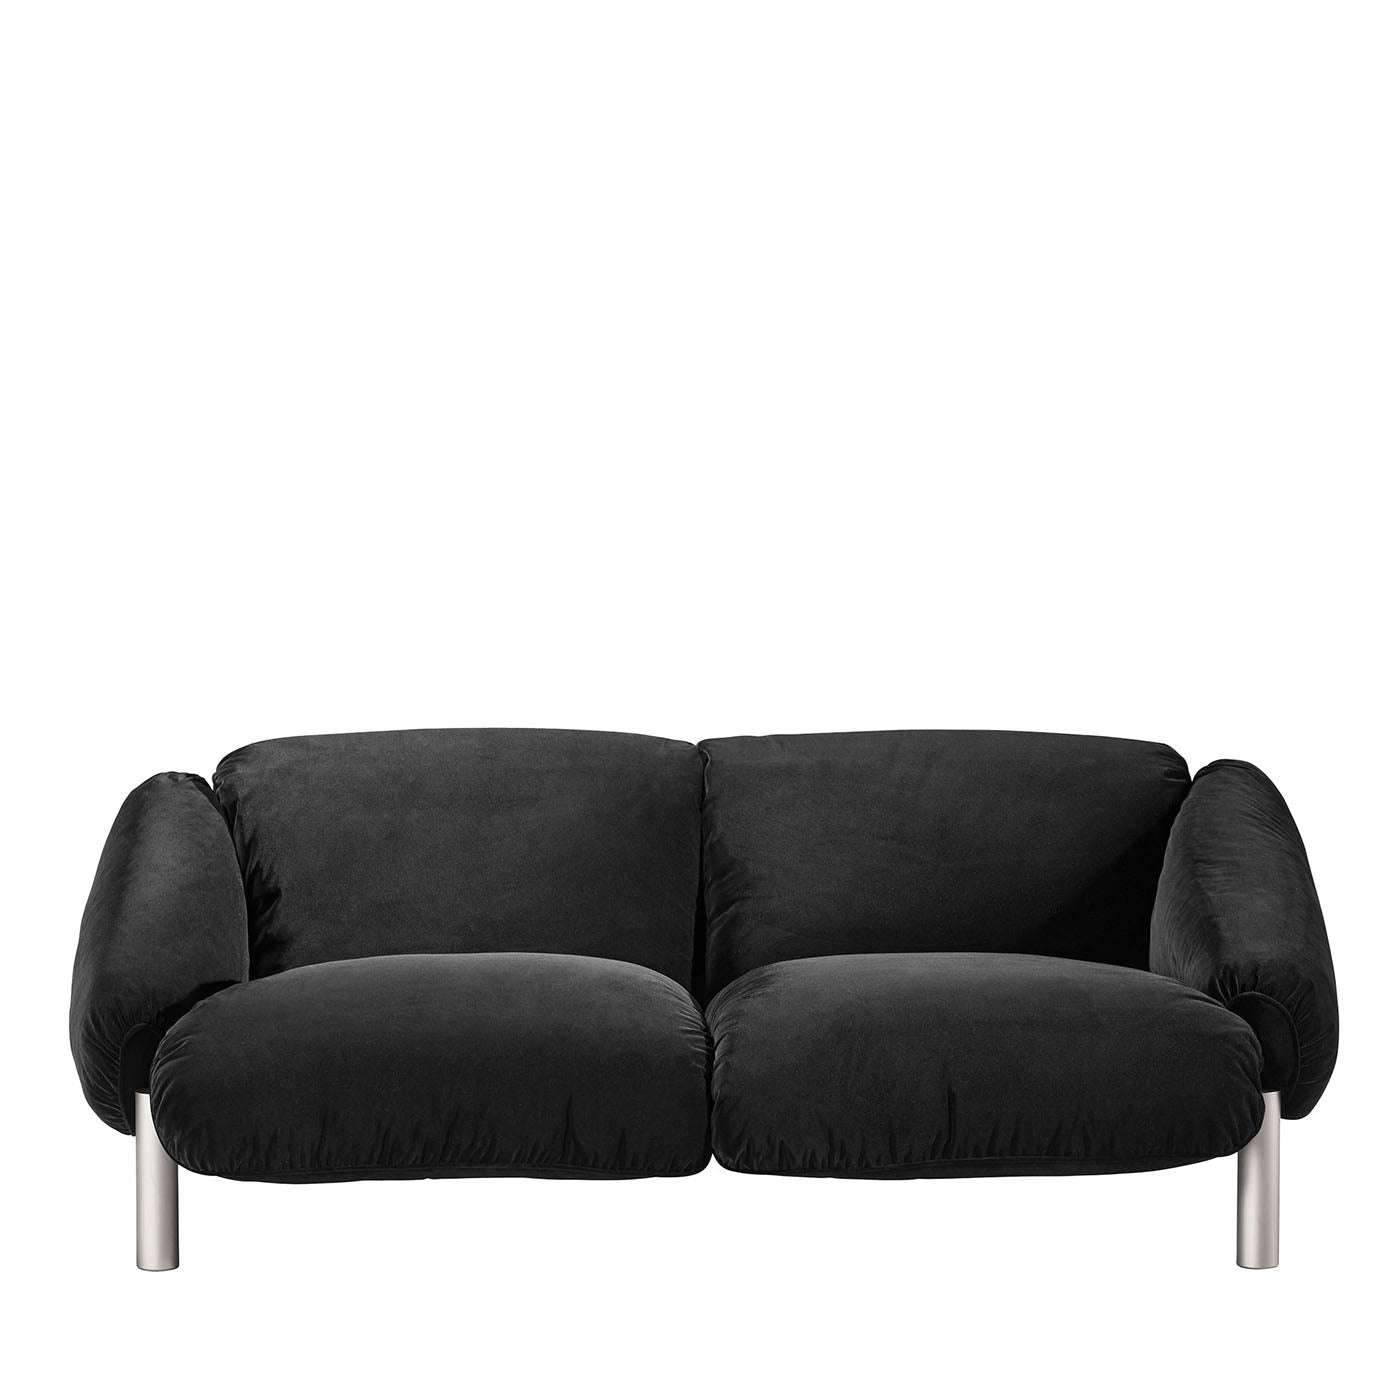 Flo 2-Seater Black Fabric Sofa by Lorenza Bozzoli - Main view